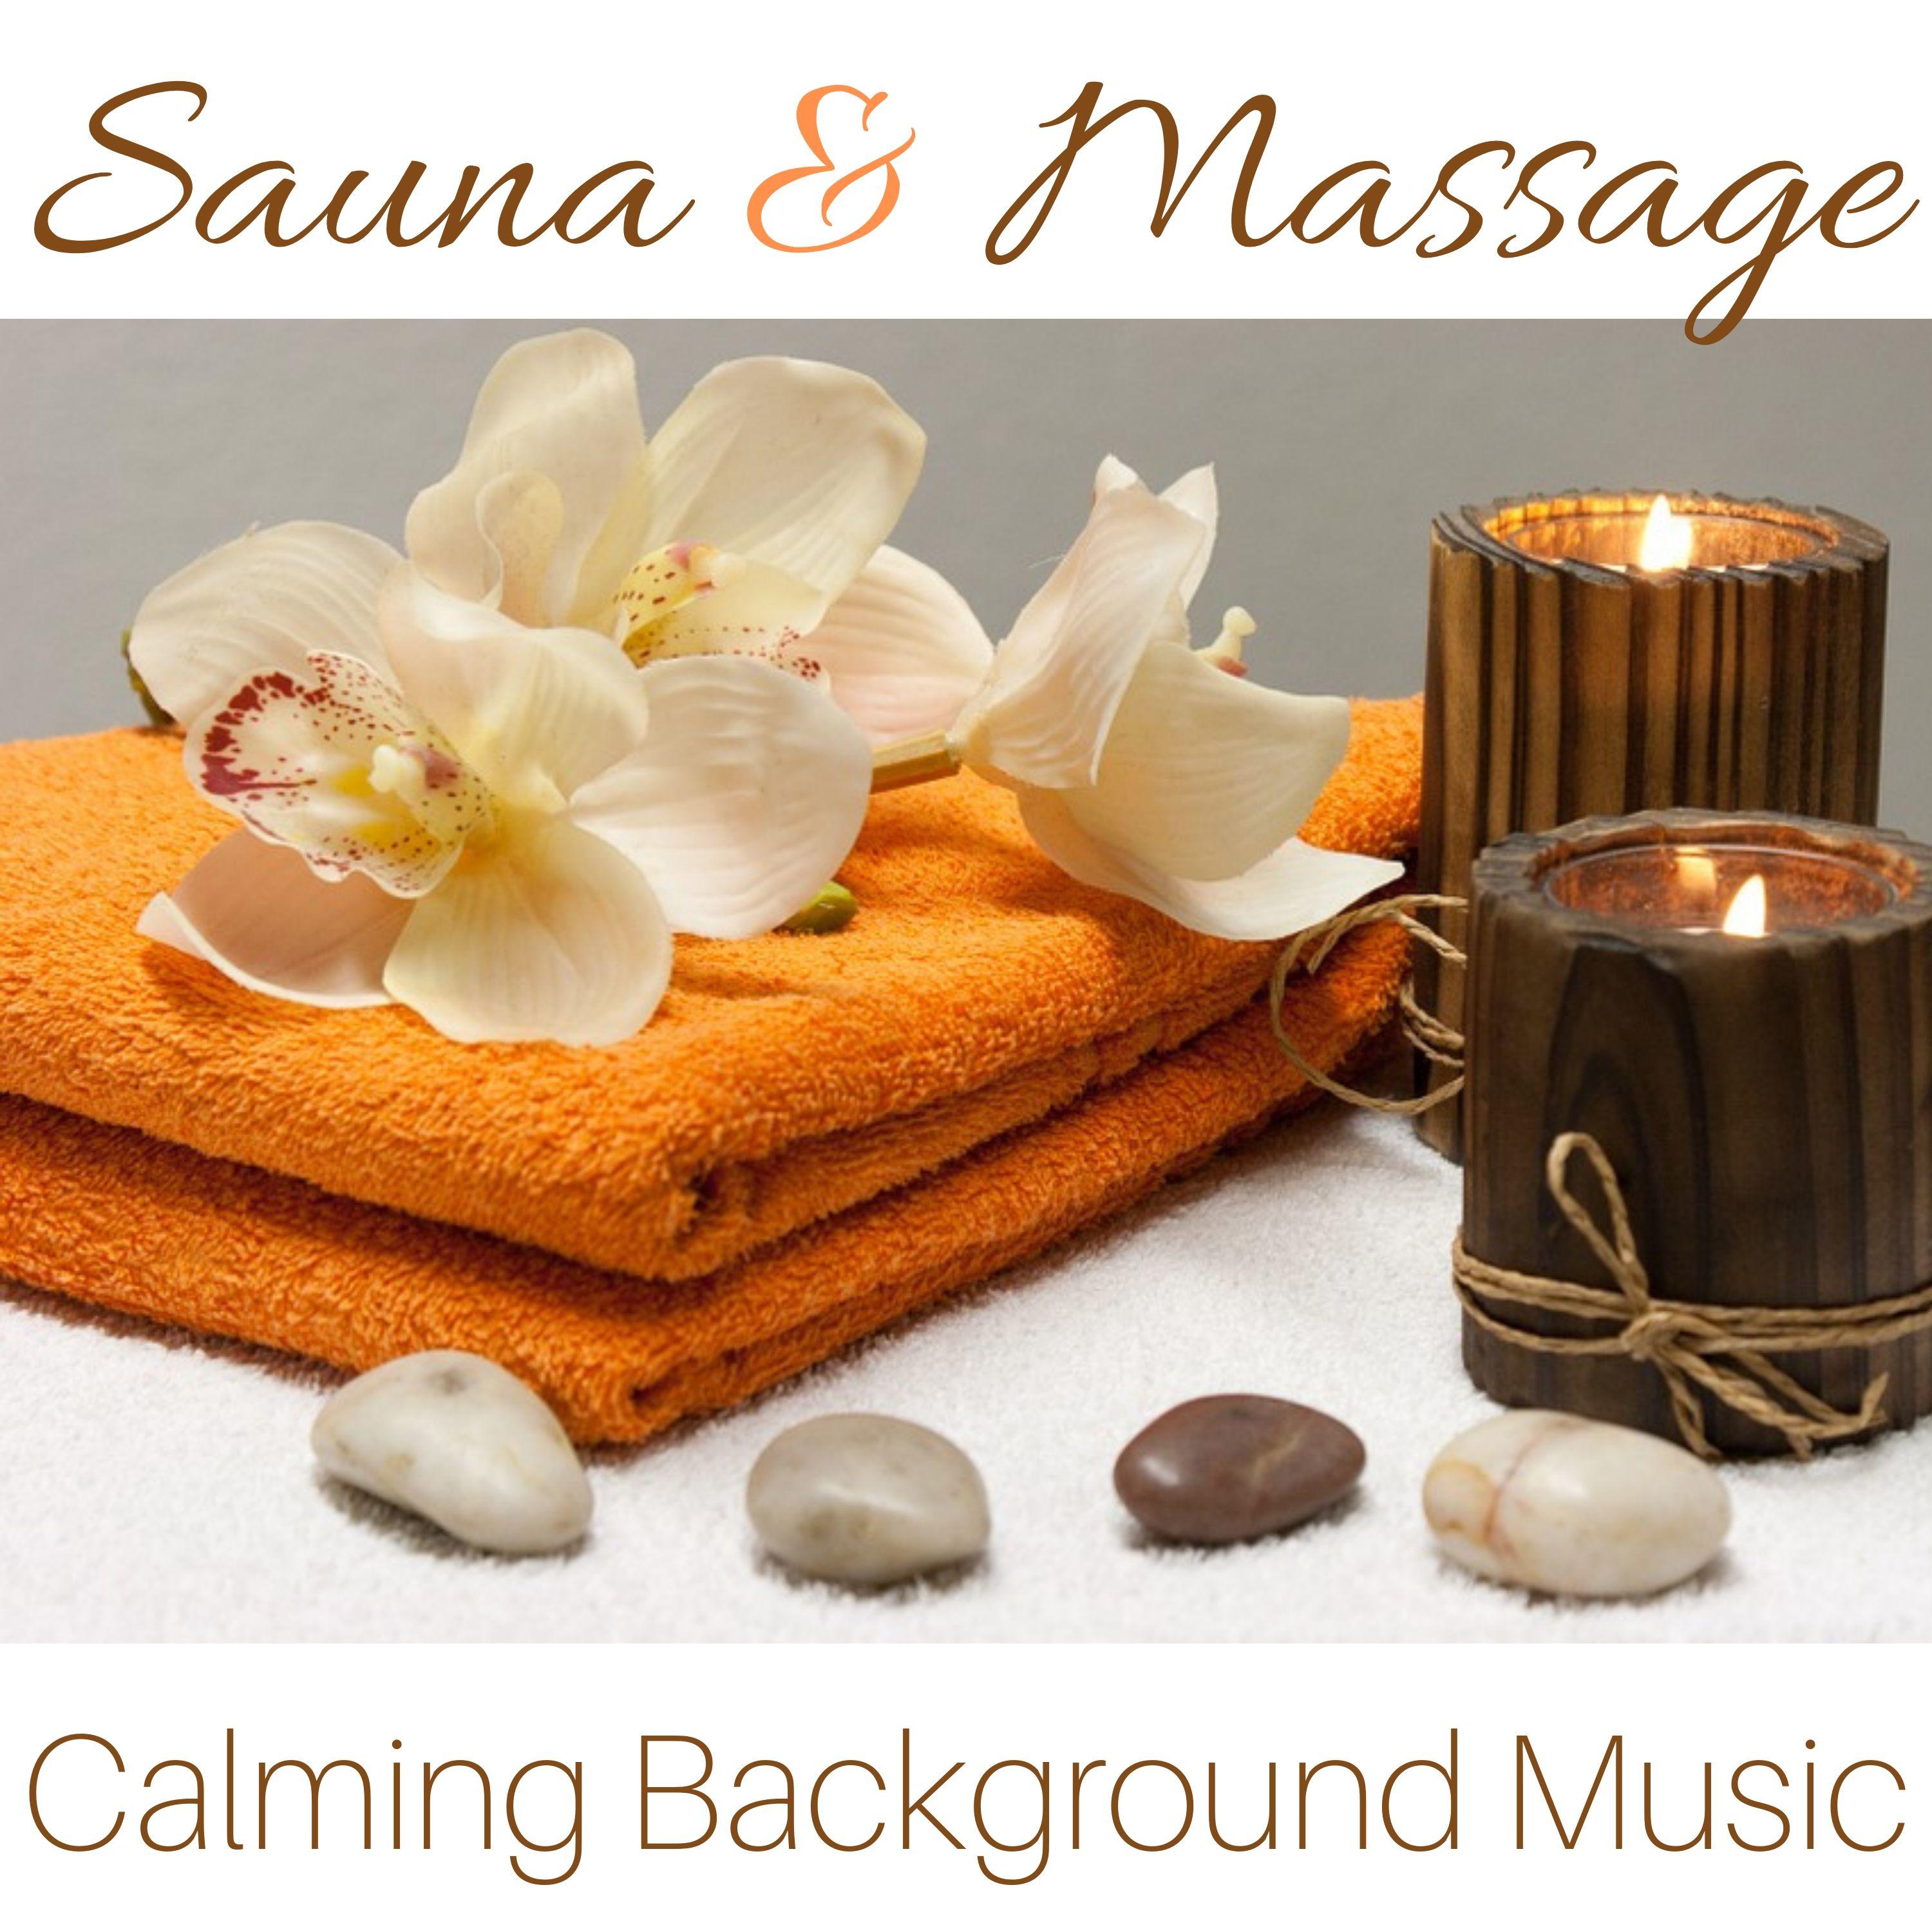 Sauna & Massage - Calming Background Music